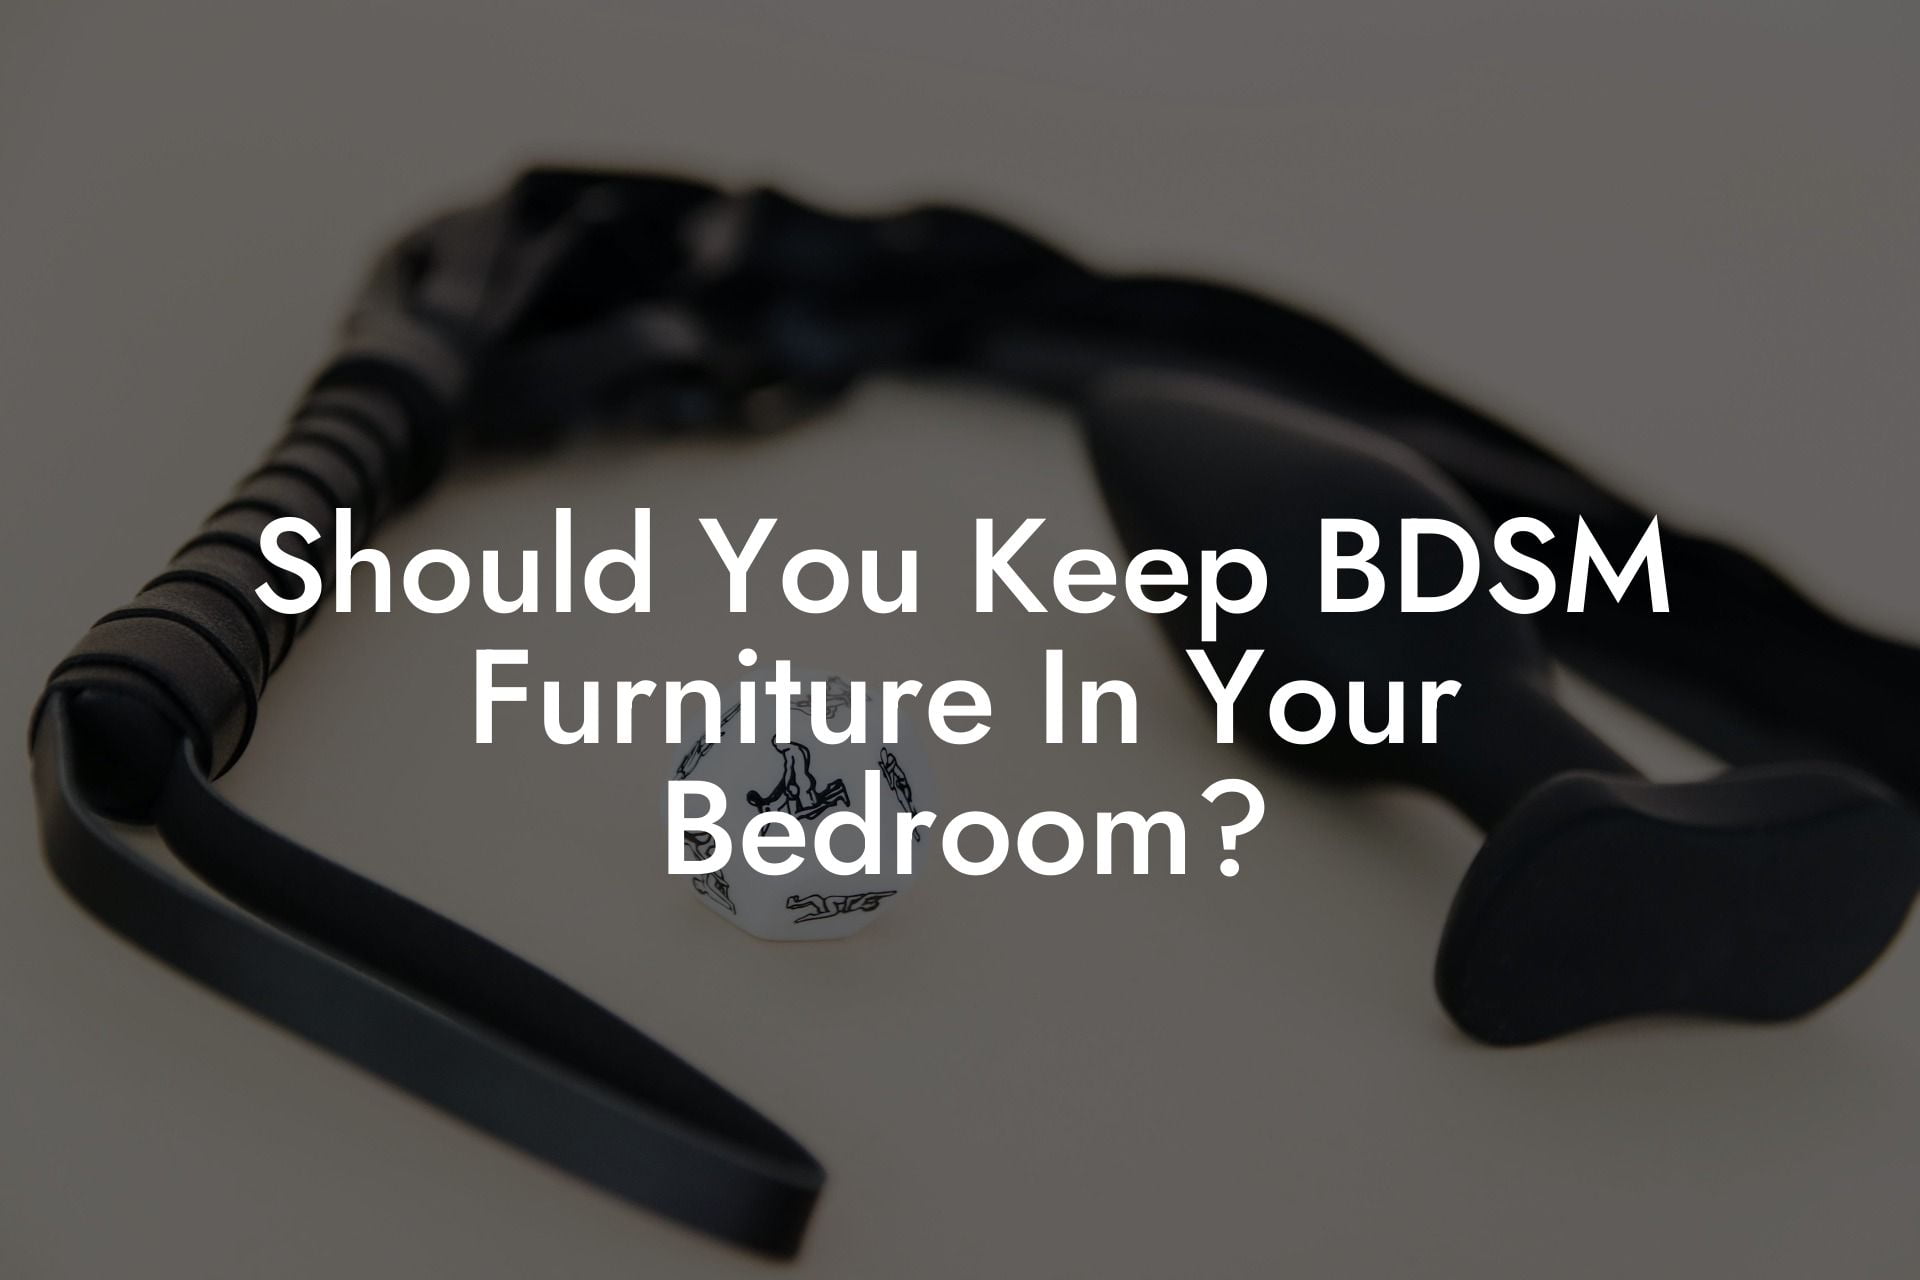 Should You Keep BDSM Furniture In Your Bedroom?